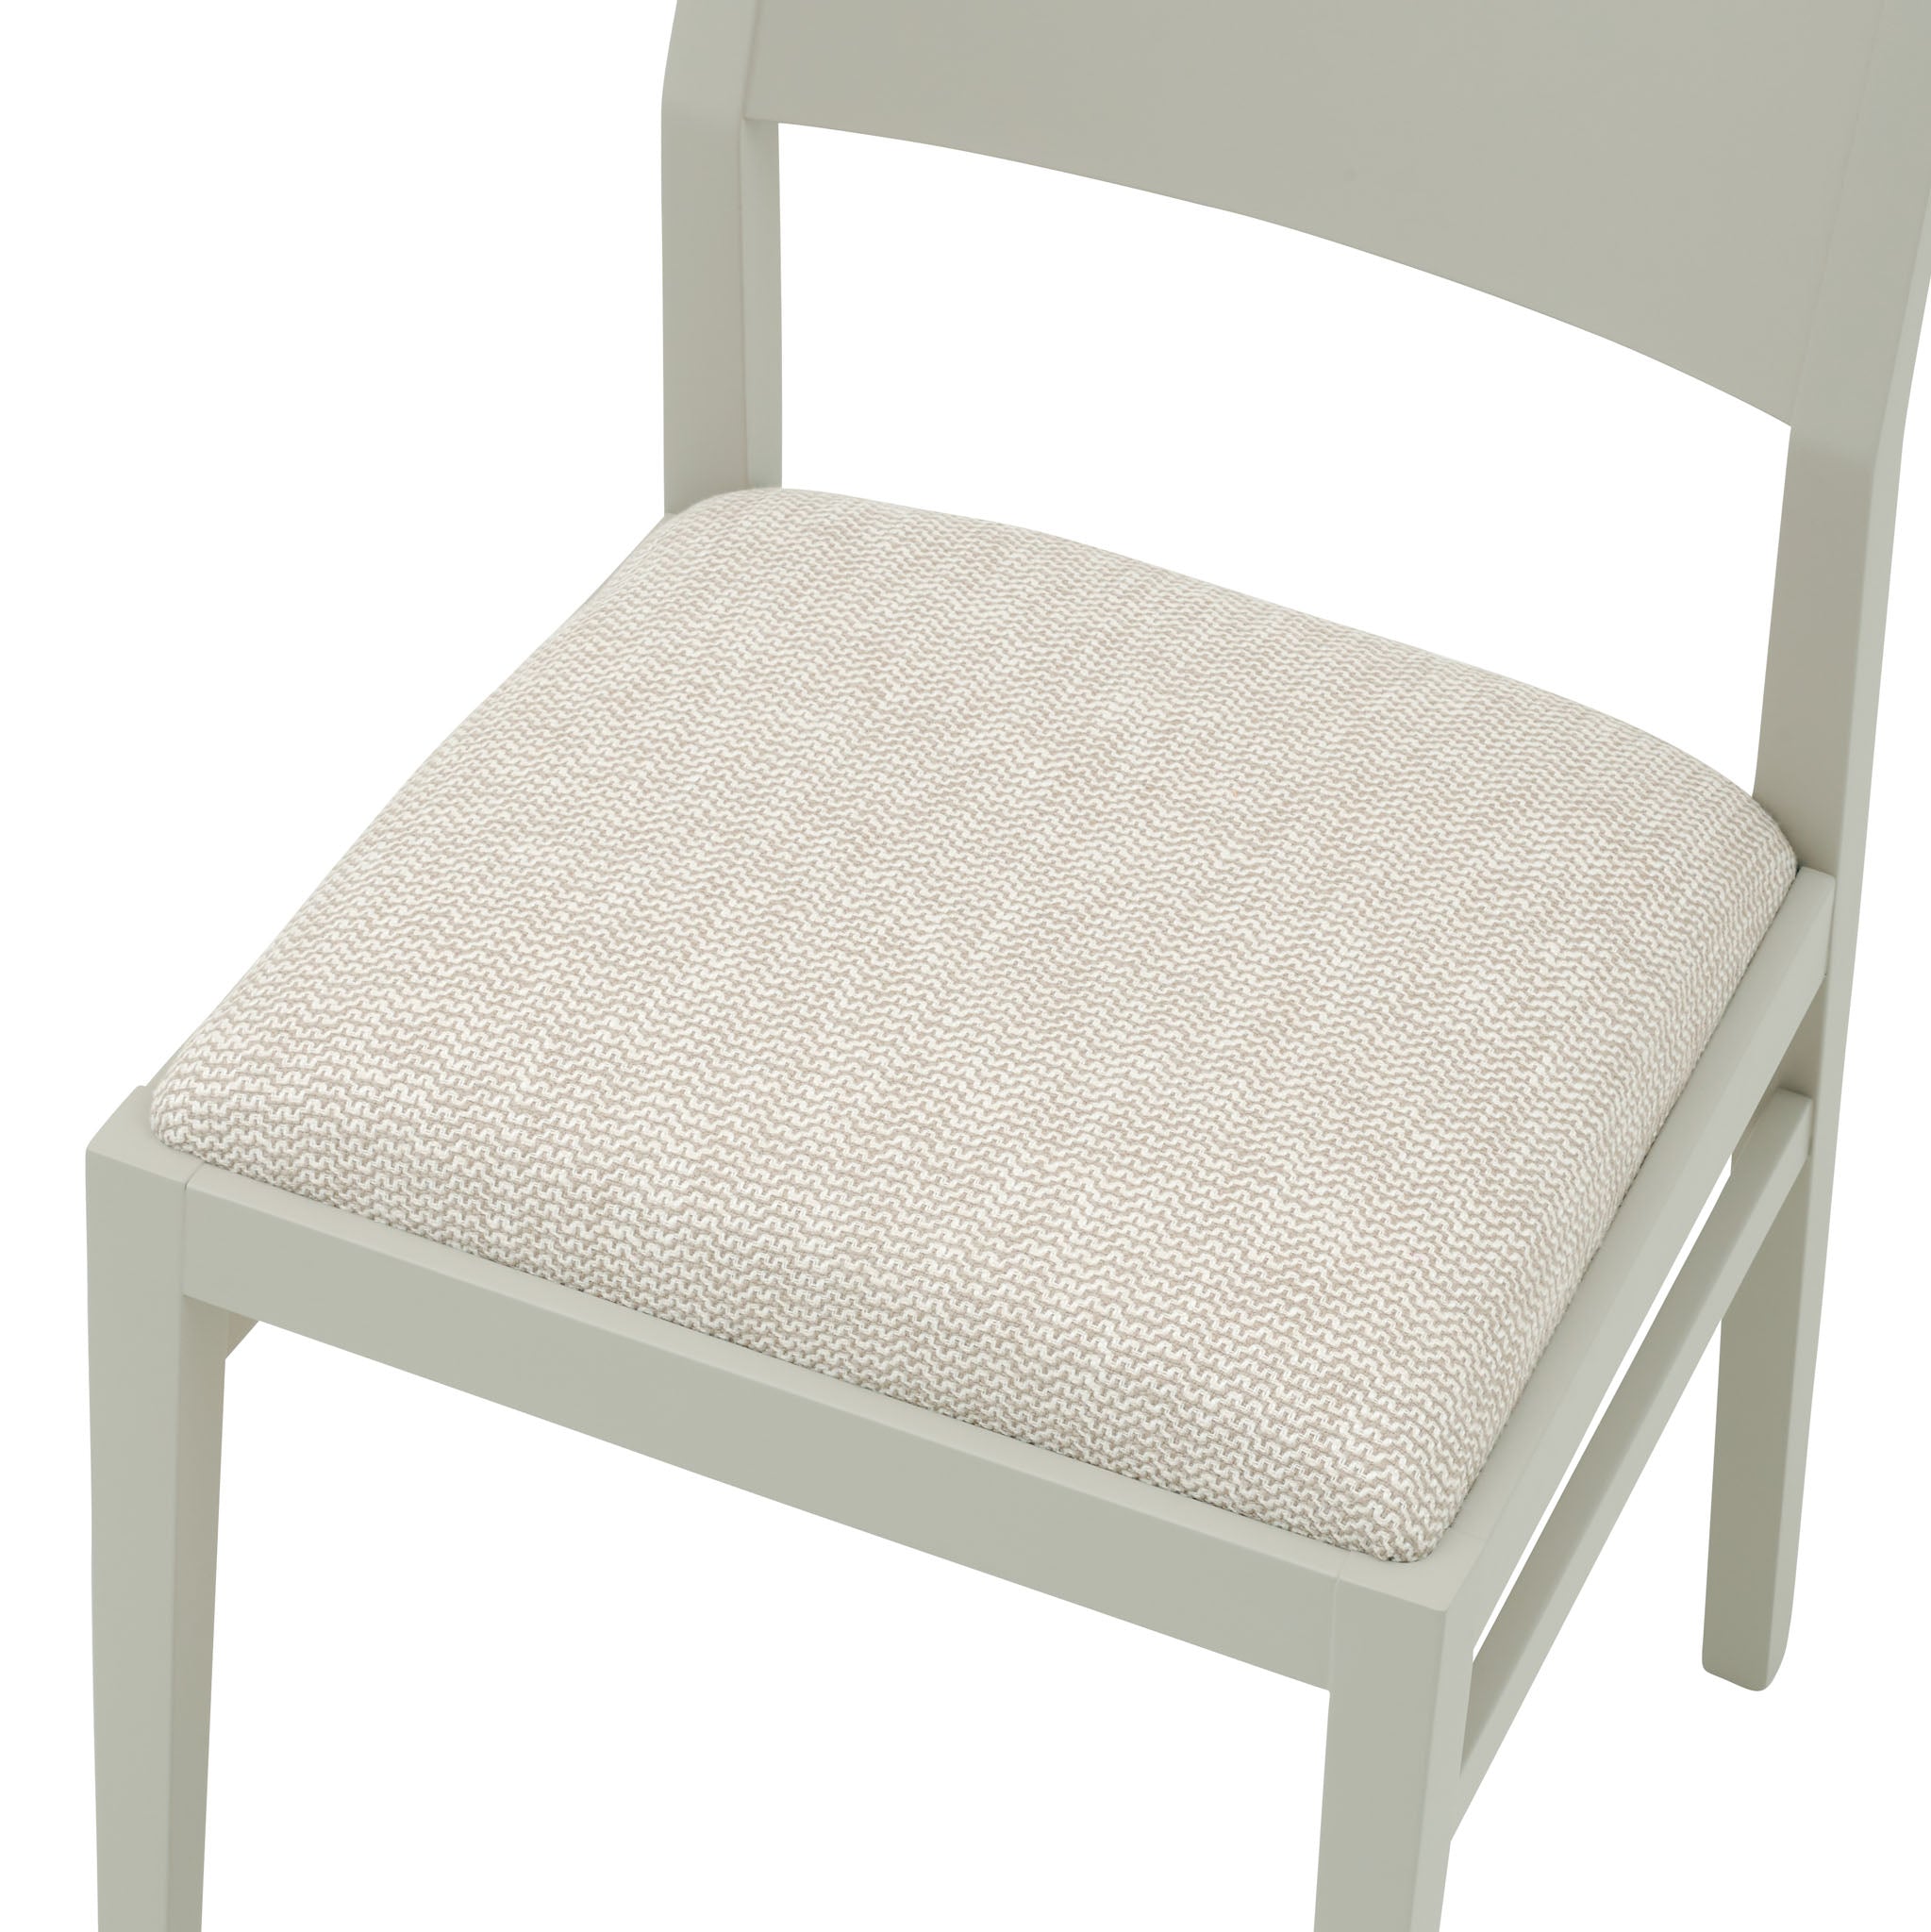 James Chair upholstered in the textured weave Kora Basket from Villa Nova